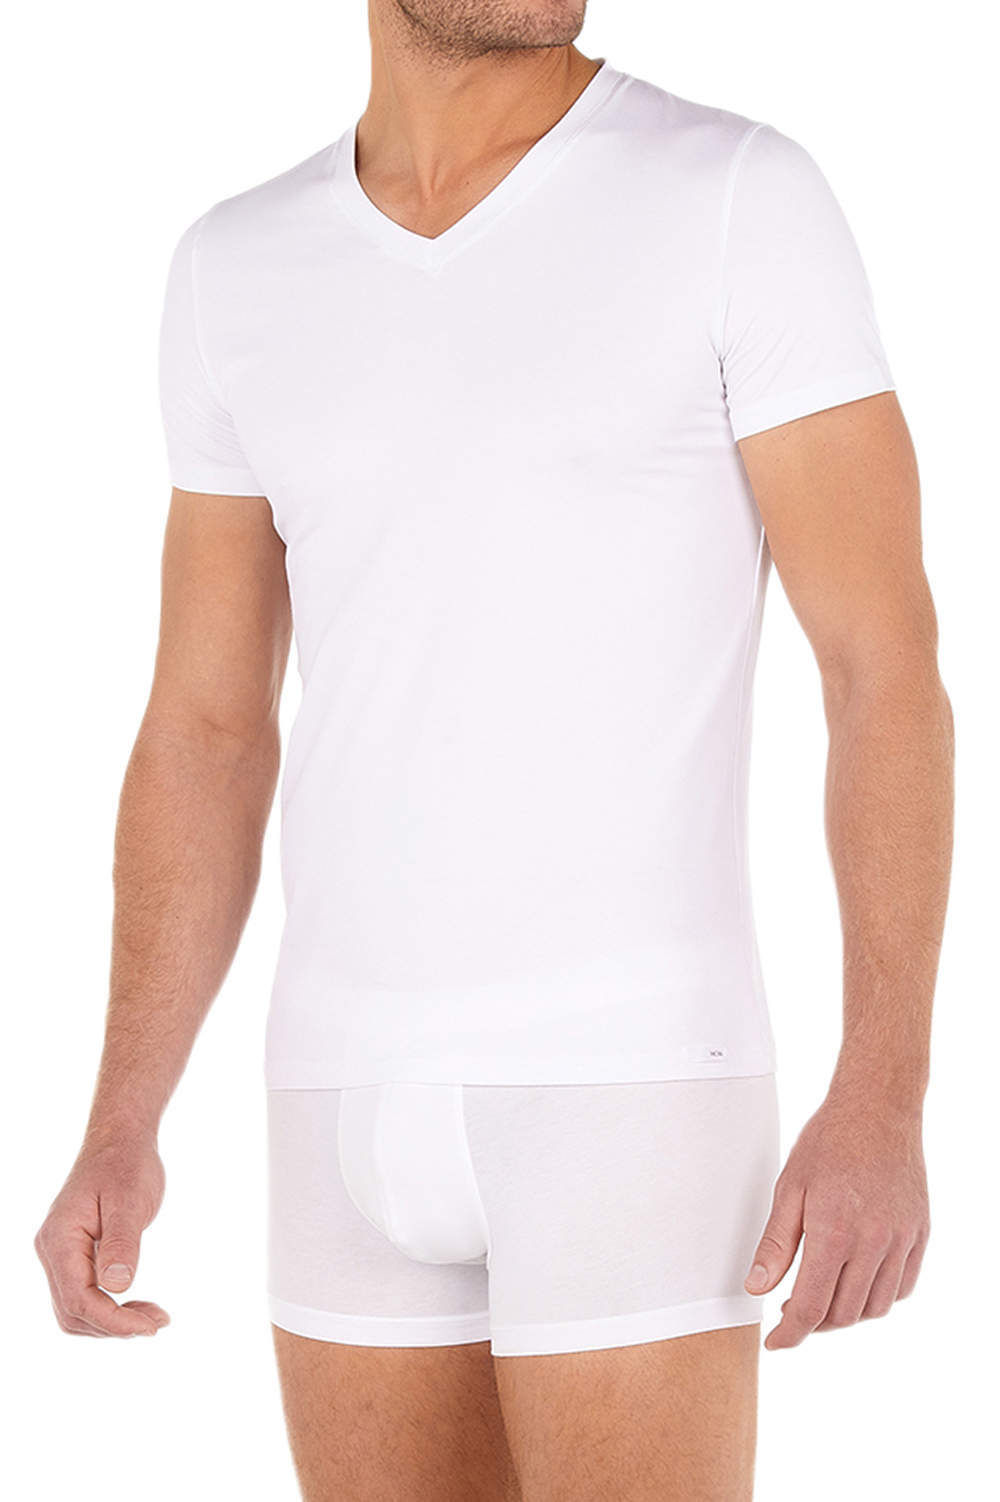 https://images.deadgoodundies.com/tr:q-80,cm-pad_resize/media/catalog/product/h/o/hom-tencel-soft-v-neck-t-shirt-white-front.jpg